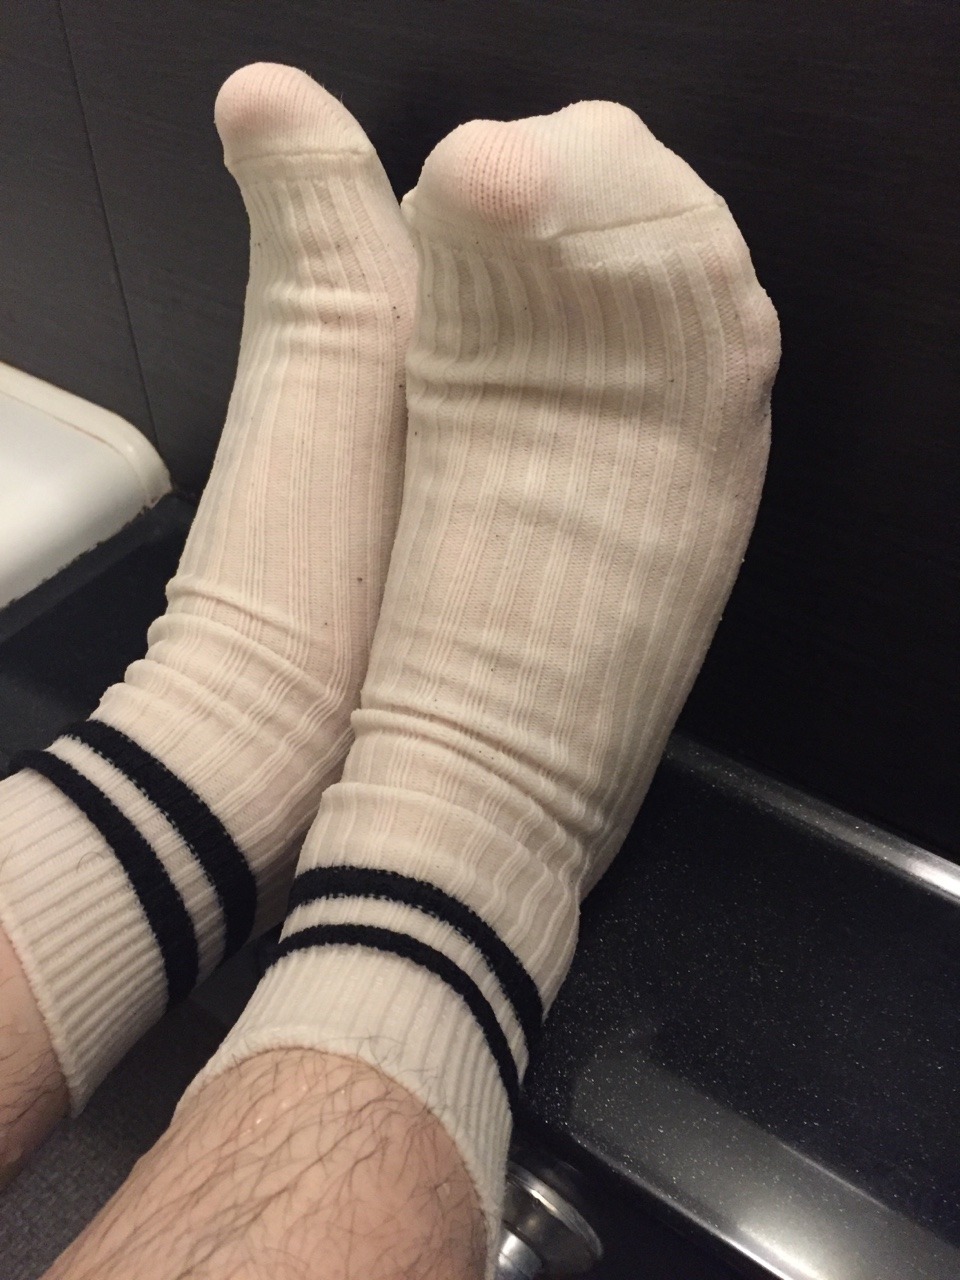 wet socks on Tumblr